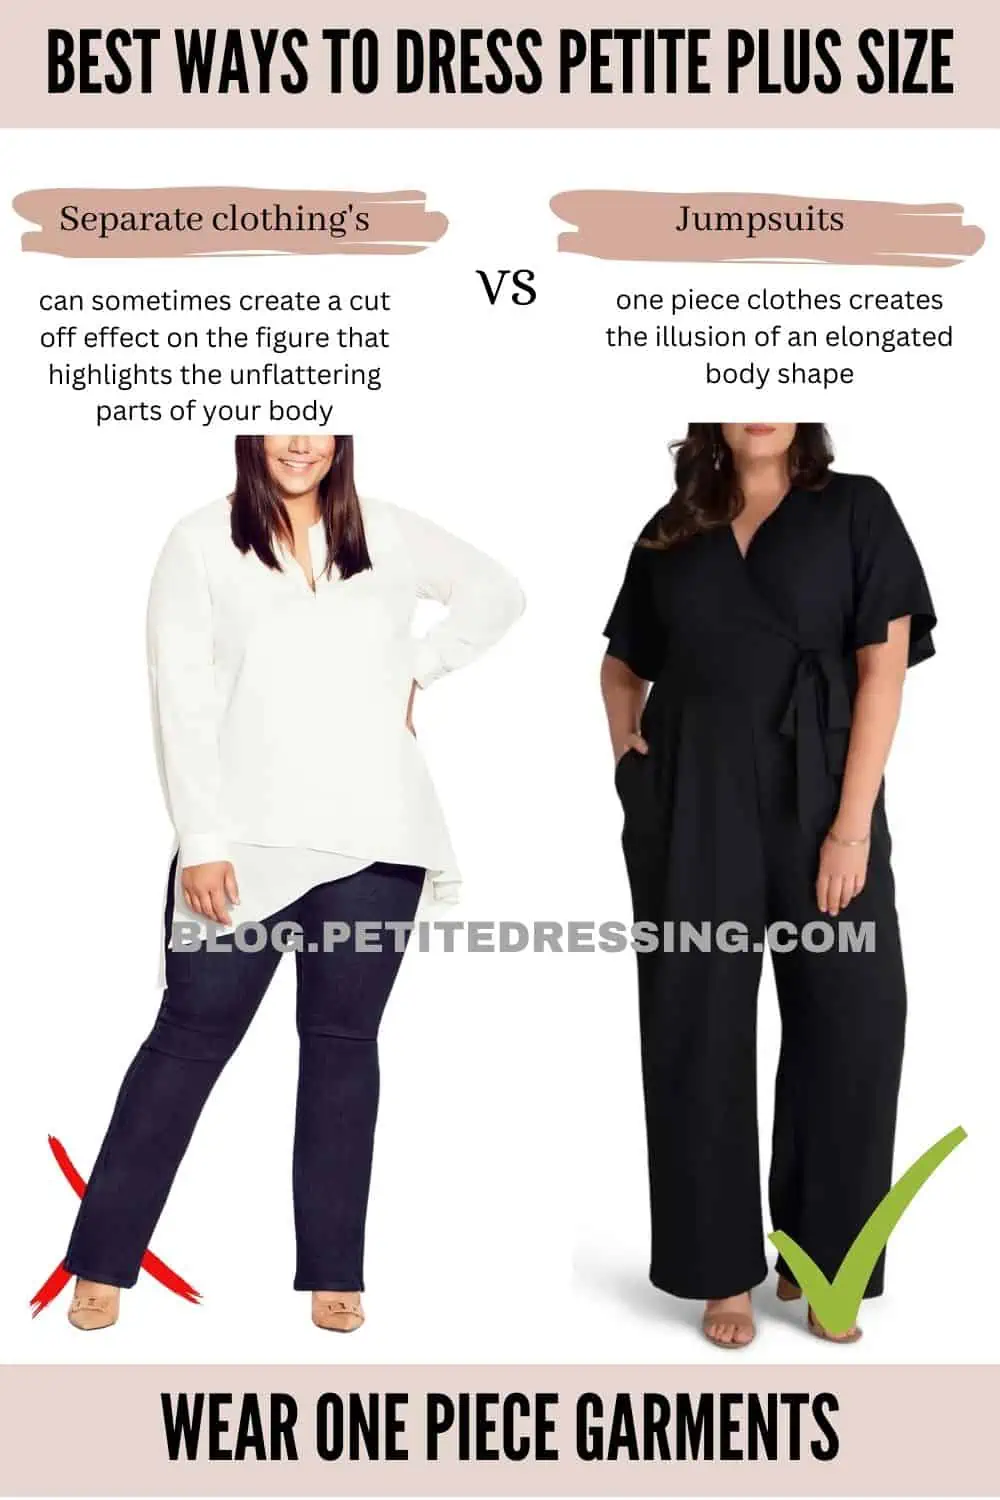 Petite Plus Size Clothing for Women